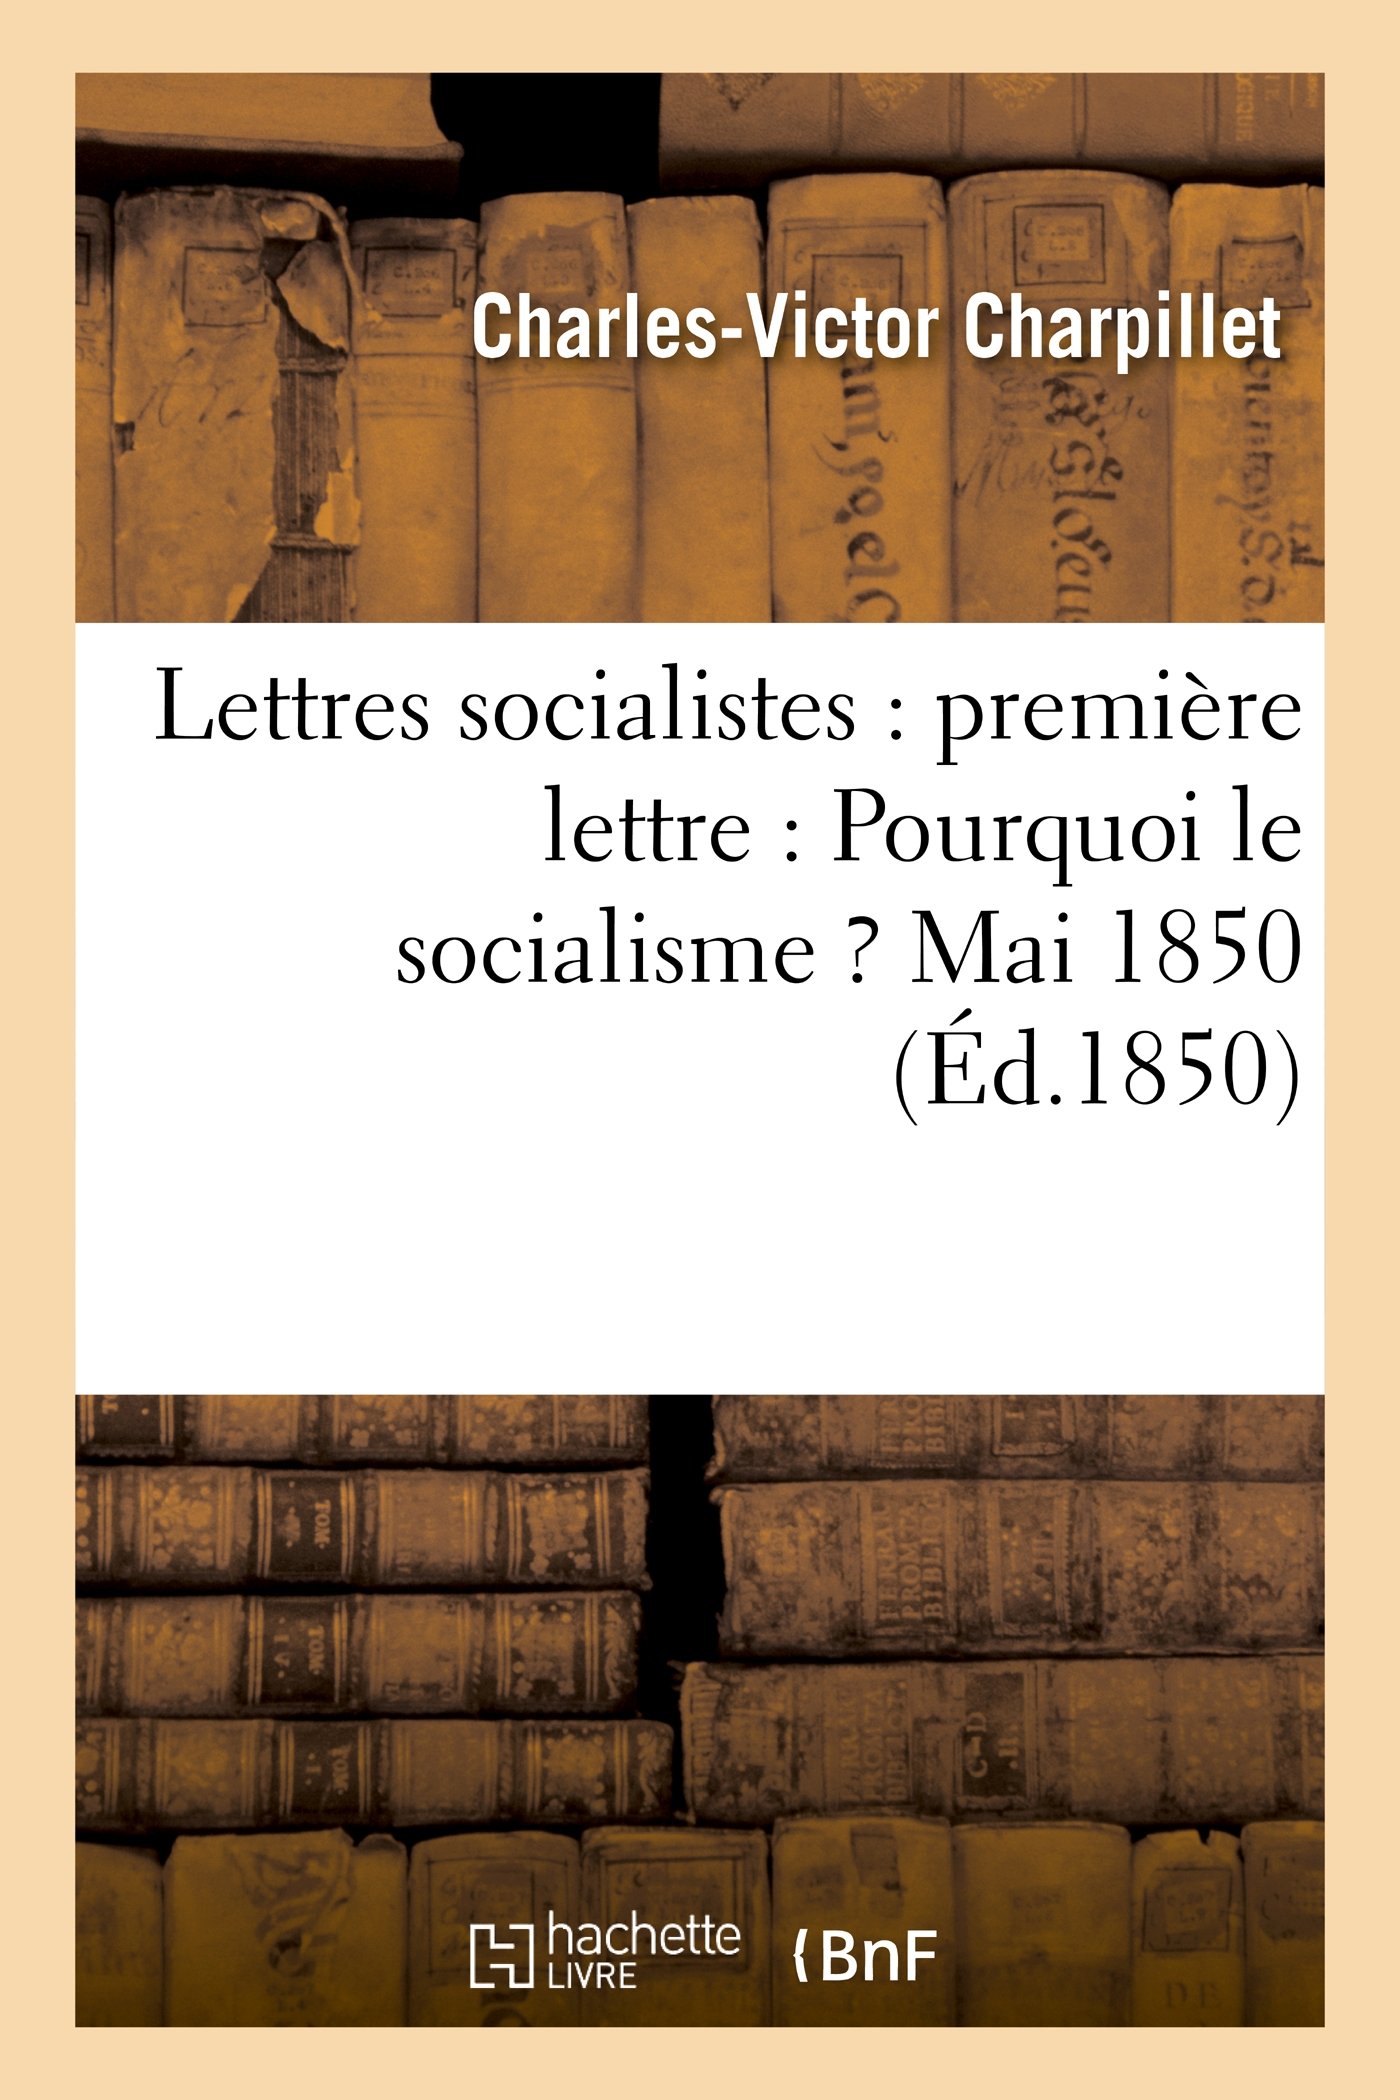 , Informations socialisme: Des lettres